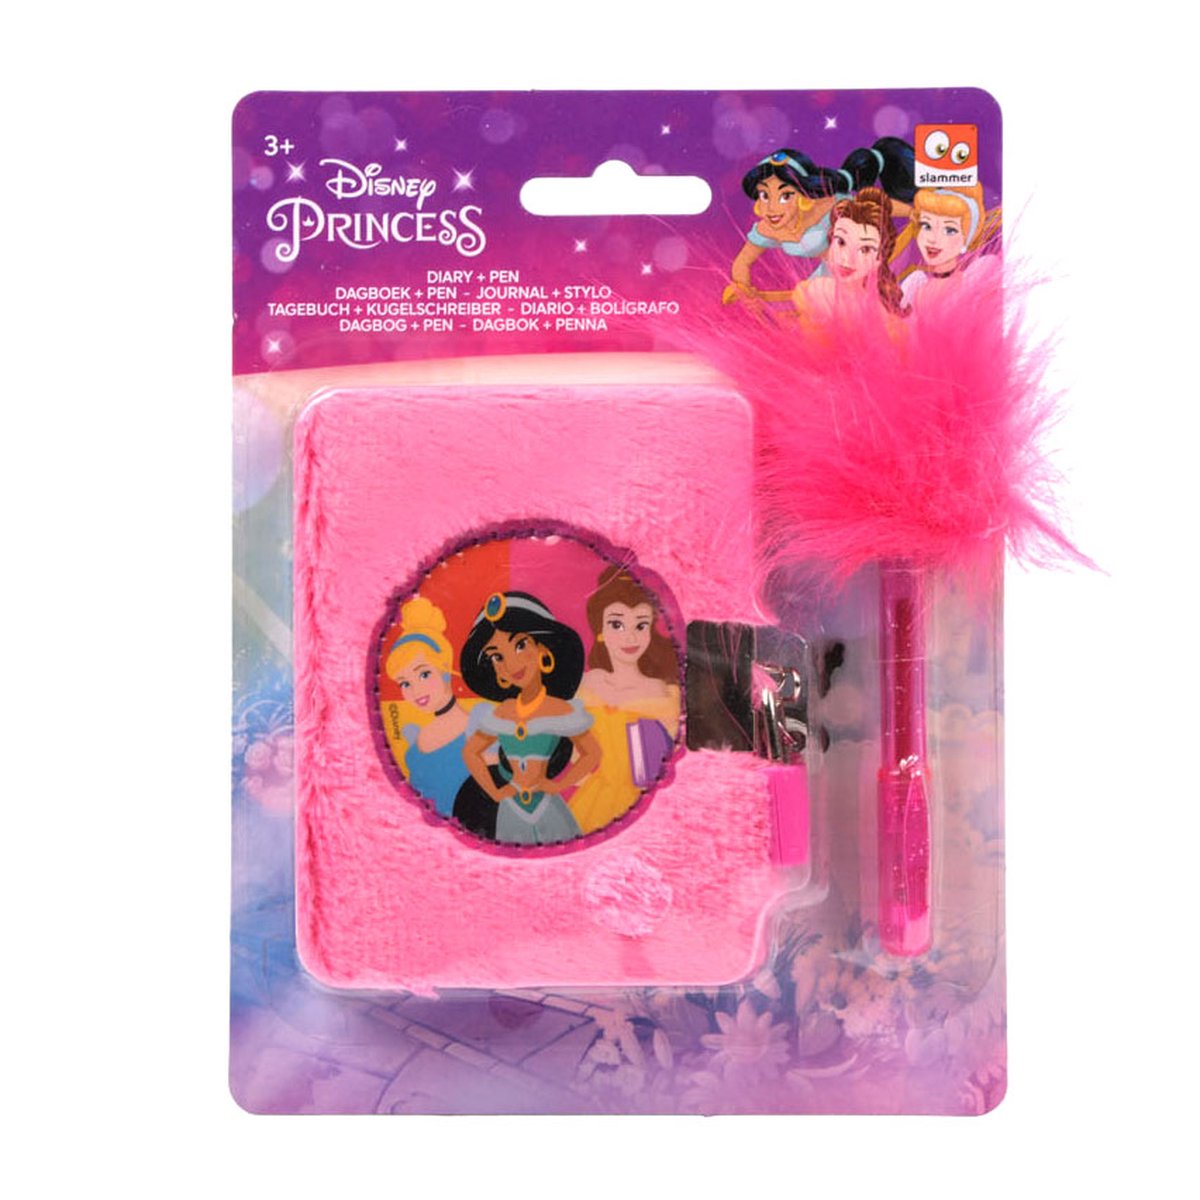 Disney Princess Dagboek - Pluche Dagboek voor Meisjes - Dagboek met Pen - Disney Prinses Dagboek - Prinsessendagboek - Jasmine, Assepoester & Belle - Dagboek voor Meisjes - Kinderdagboek - Roze Dagboek